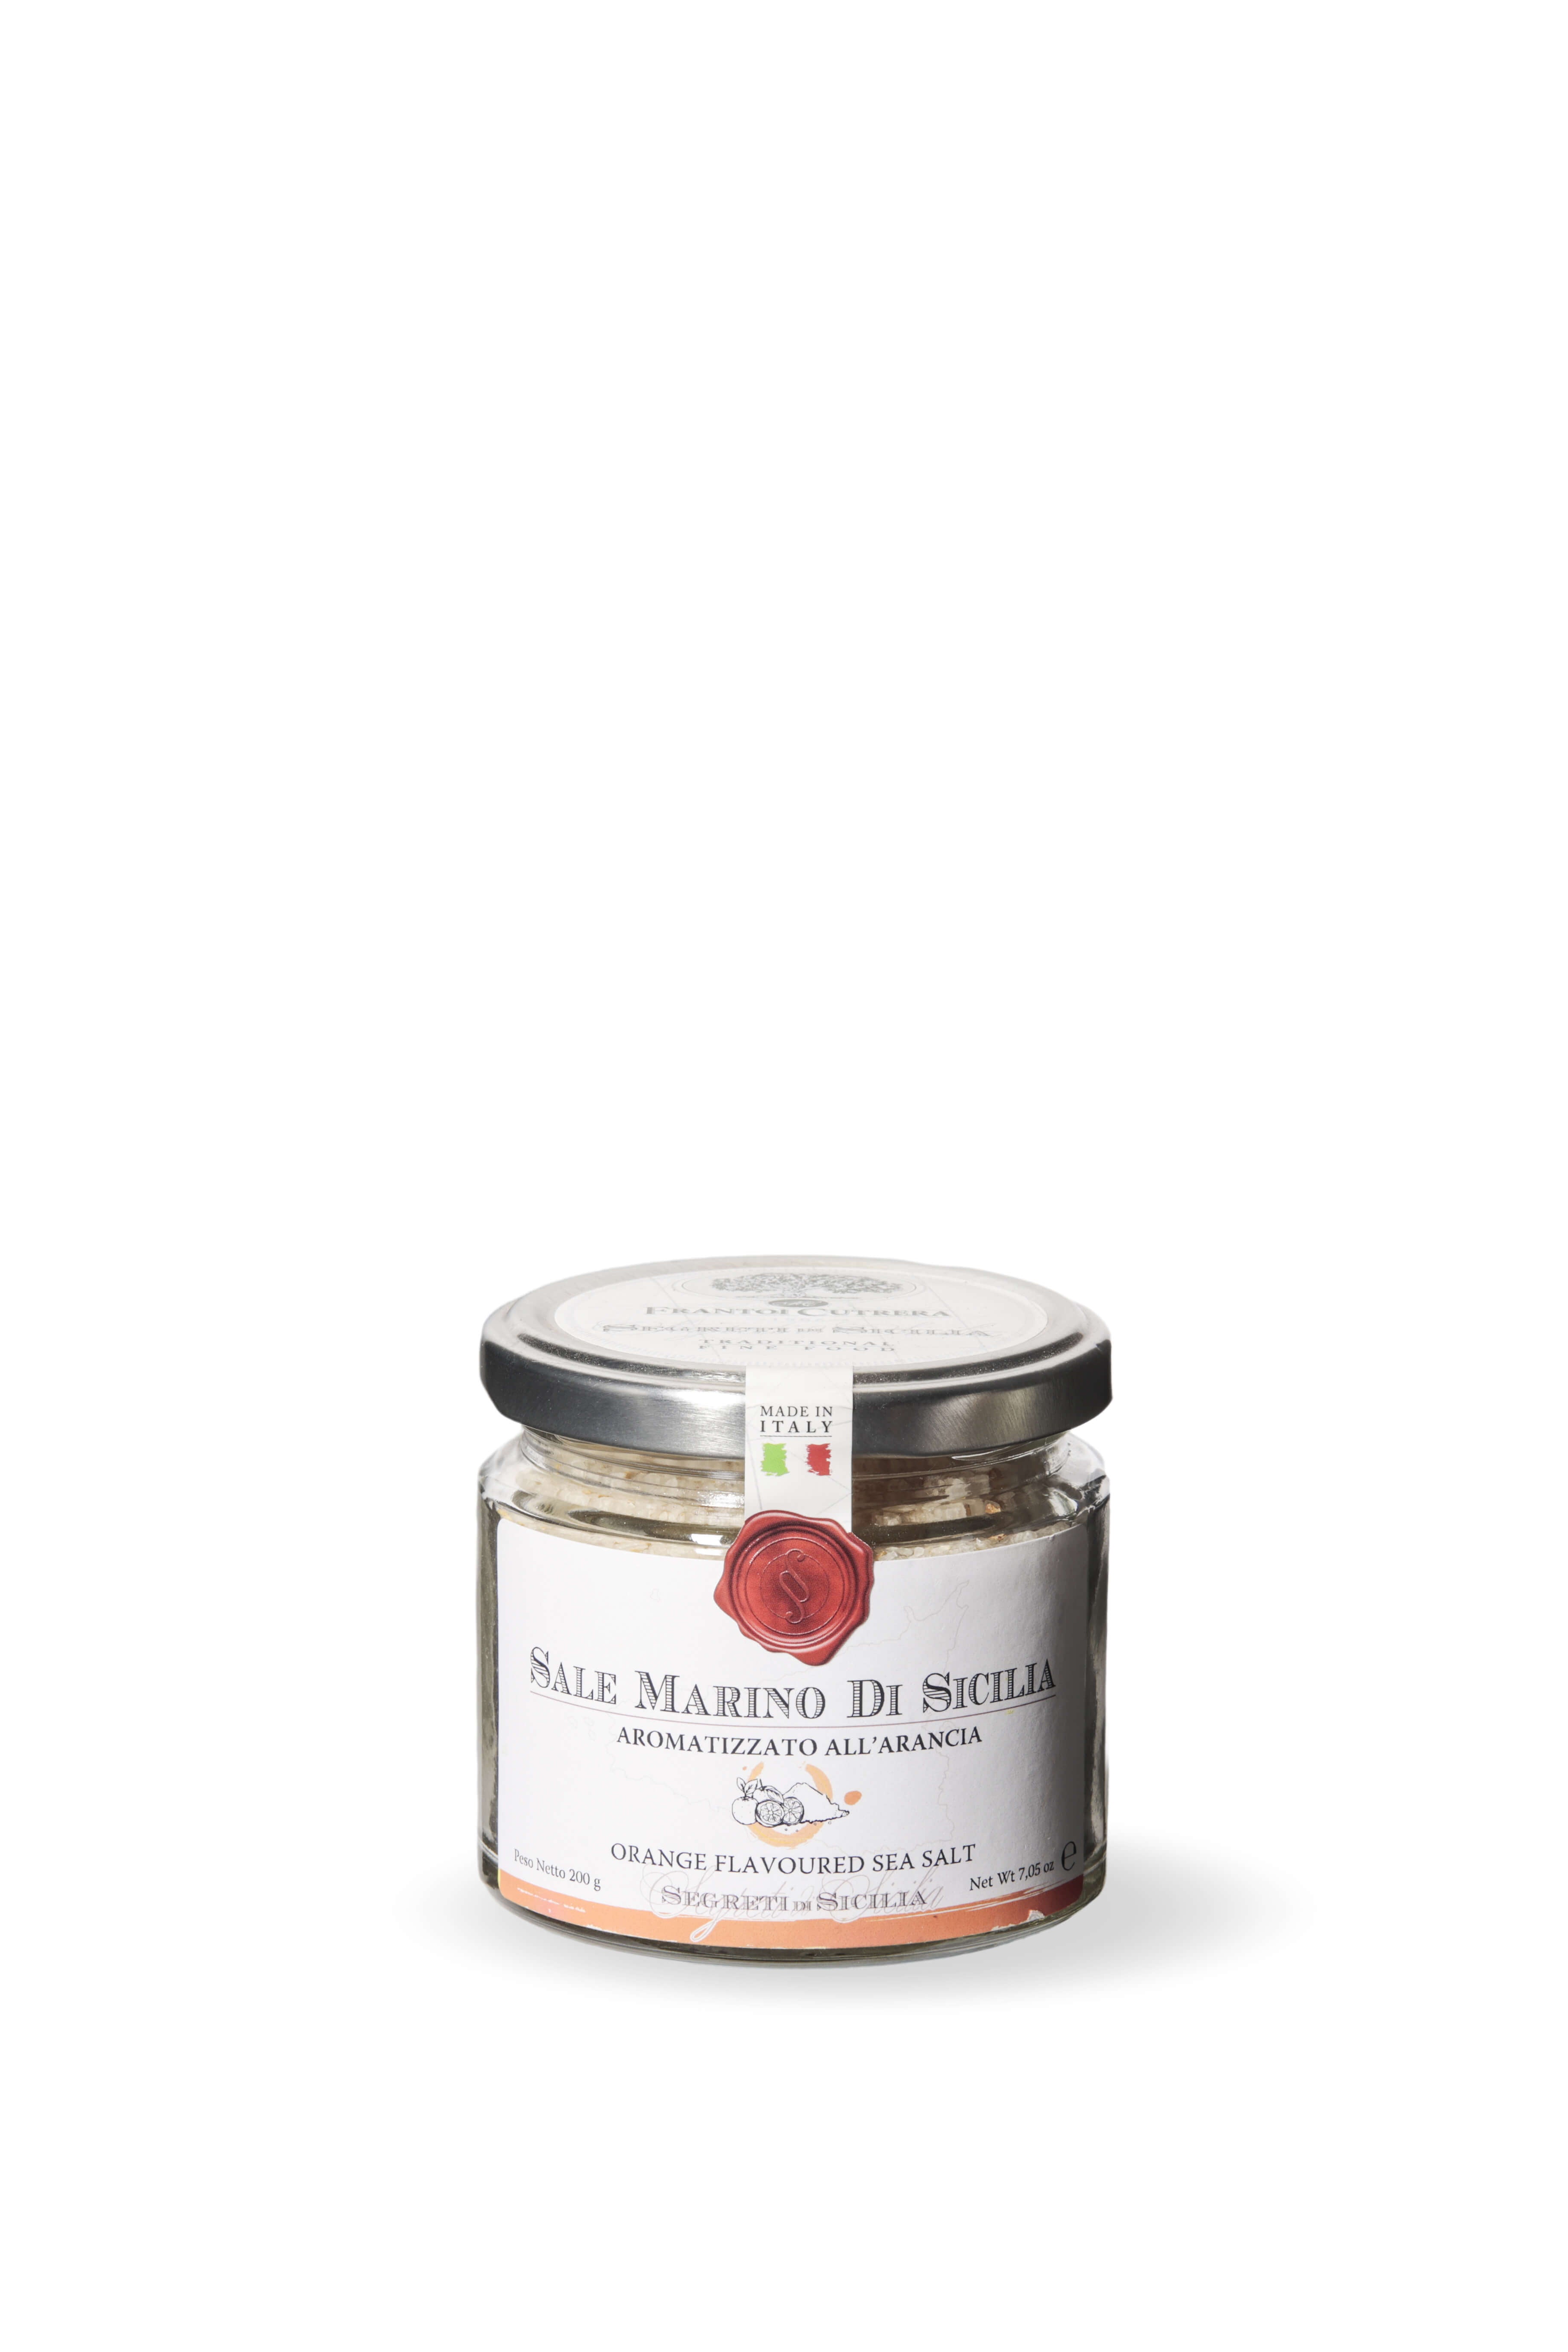 Sicilian Sea Salt Flavored with Orange